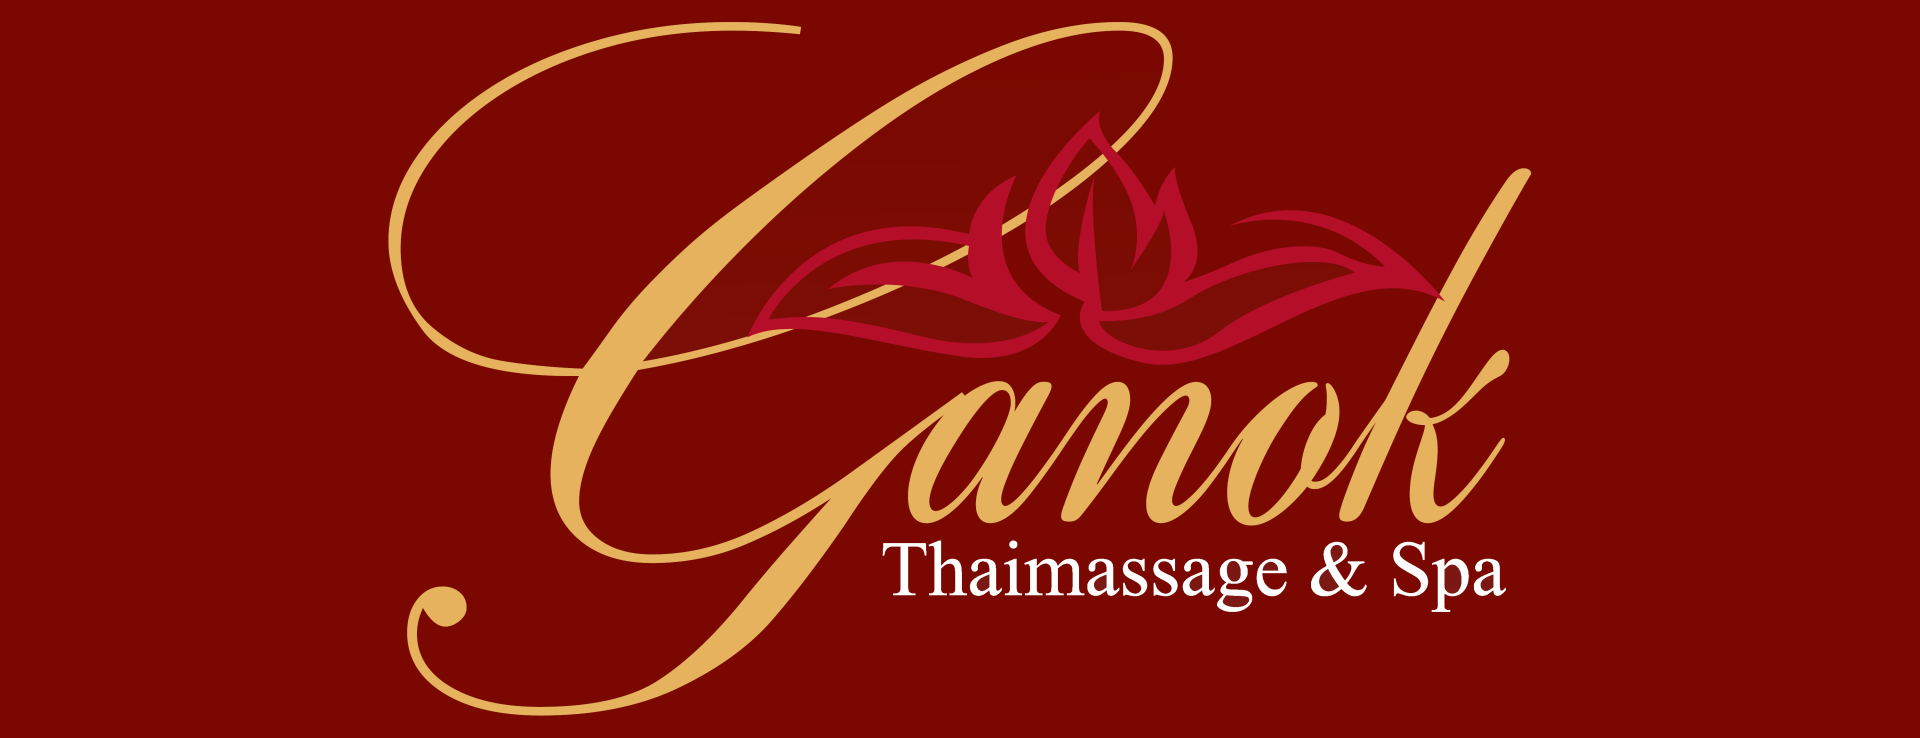 Logo Ganoh Thai Massage